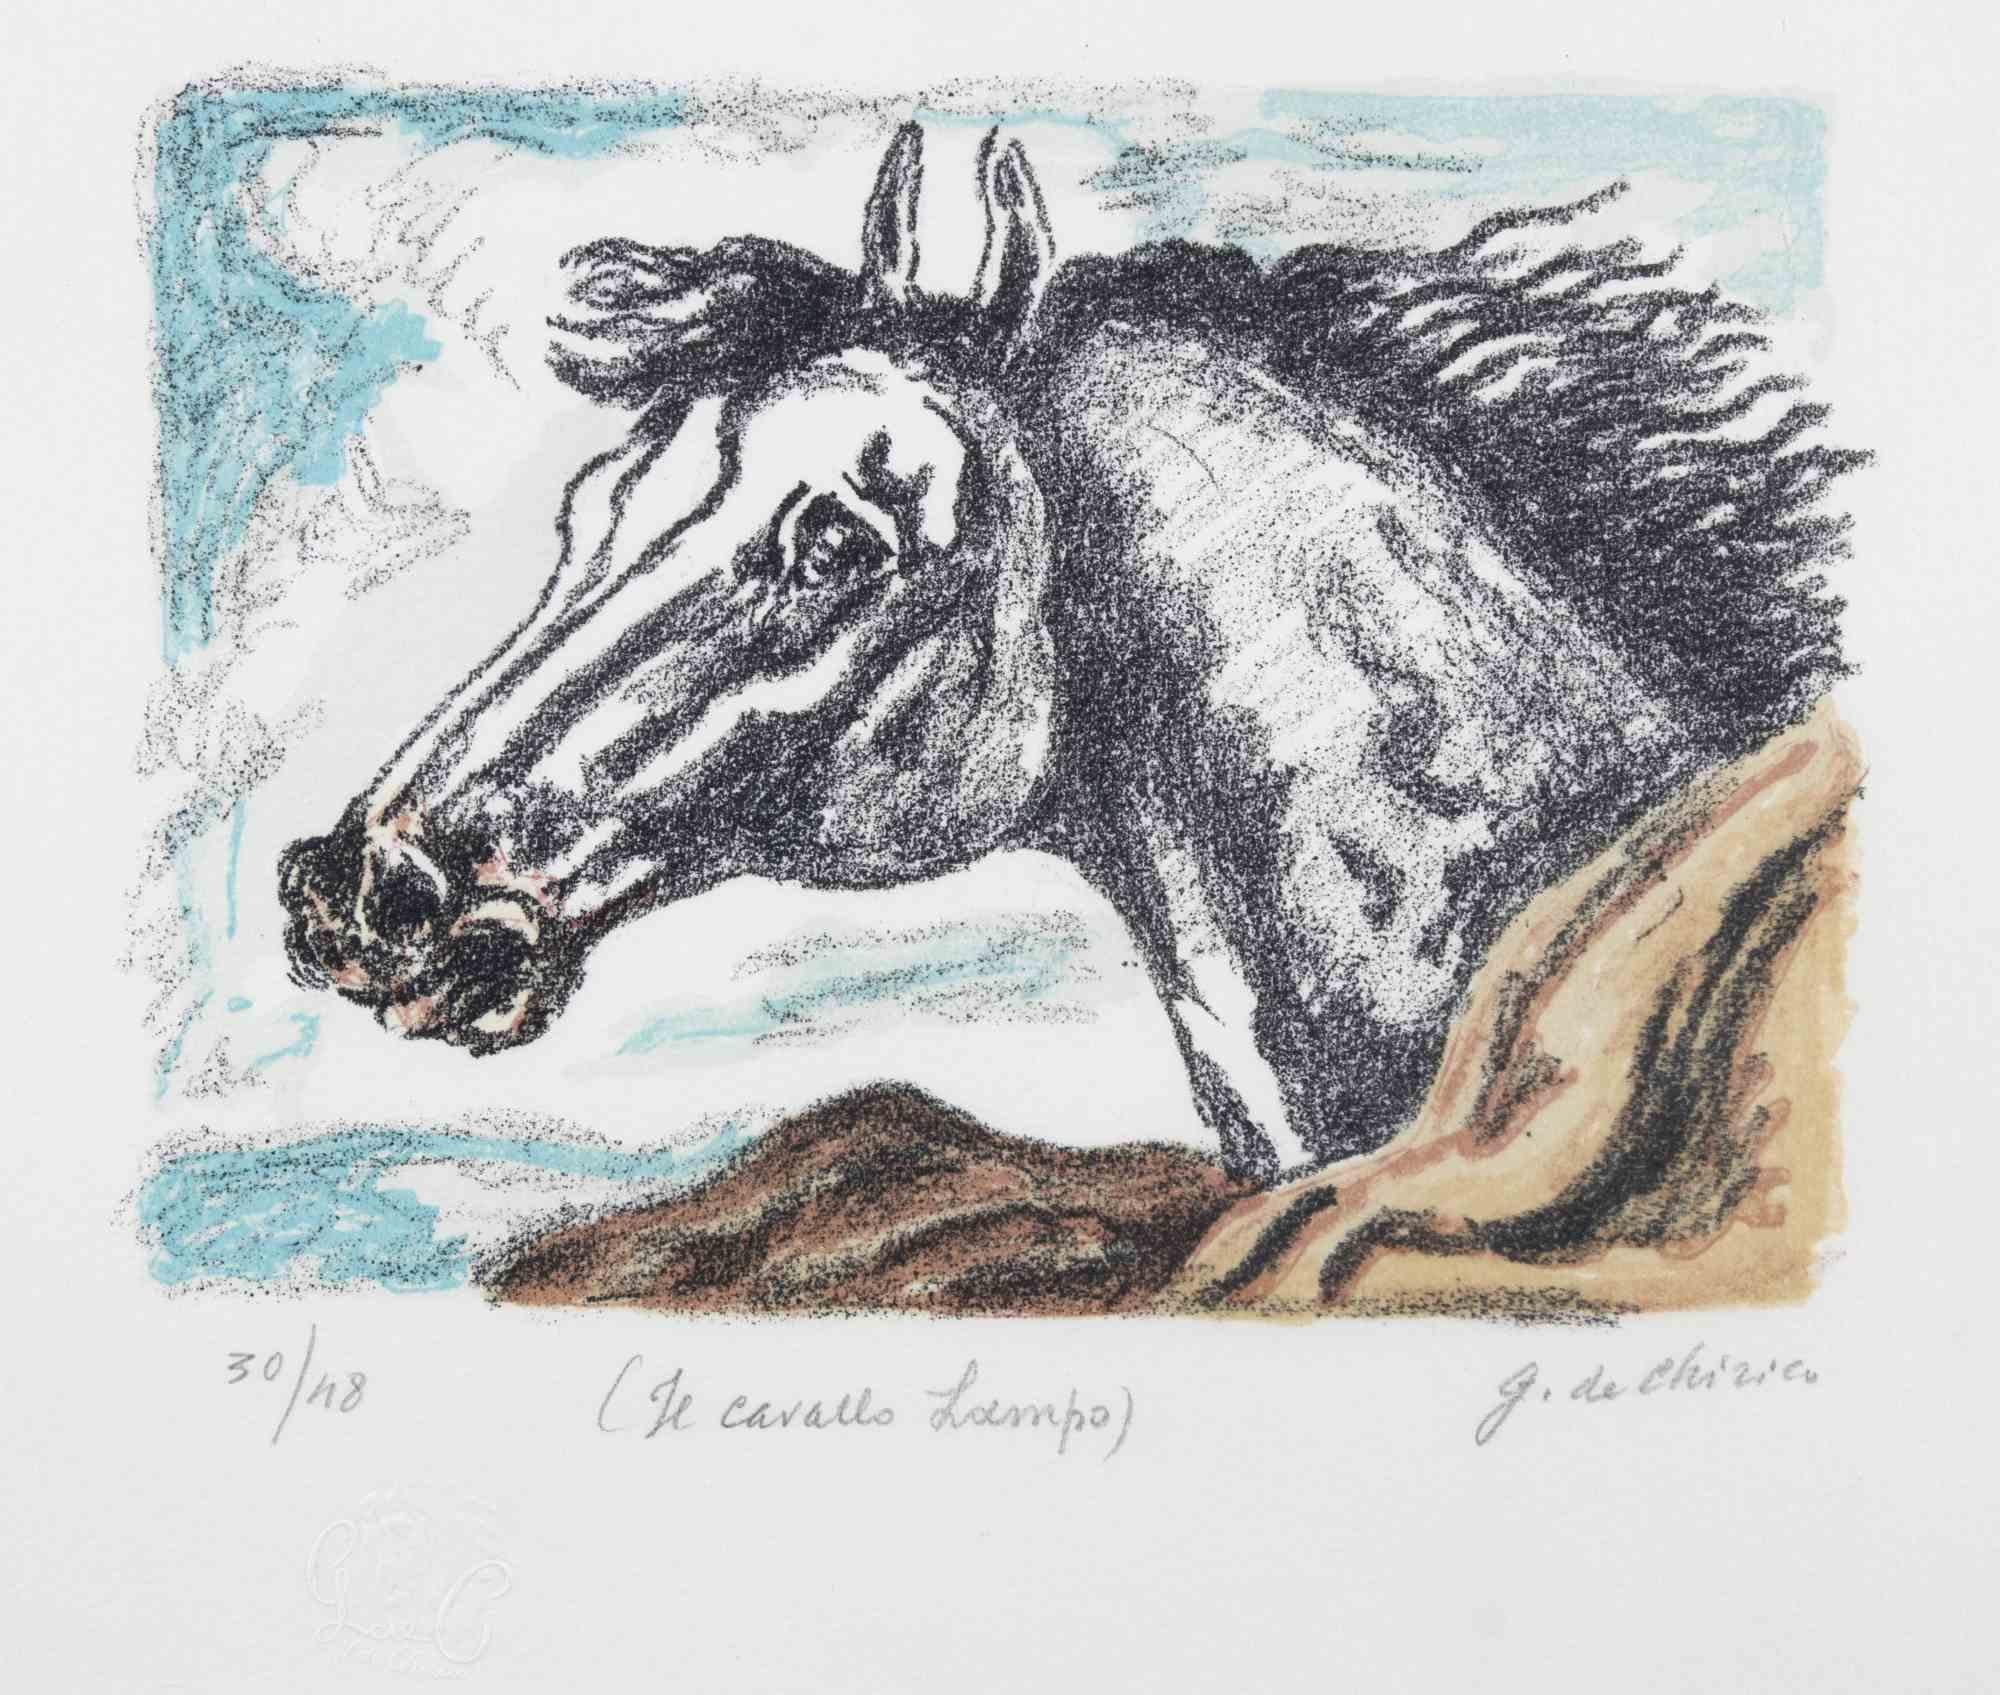 Giorgio De Chirico Animal Print - The Horse "Lampo" - Lithograph by Giorgio de Chirico - 1971